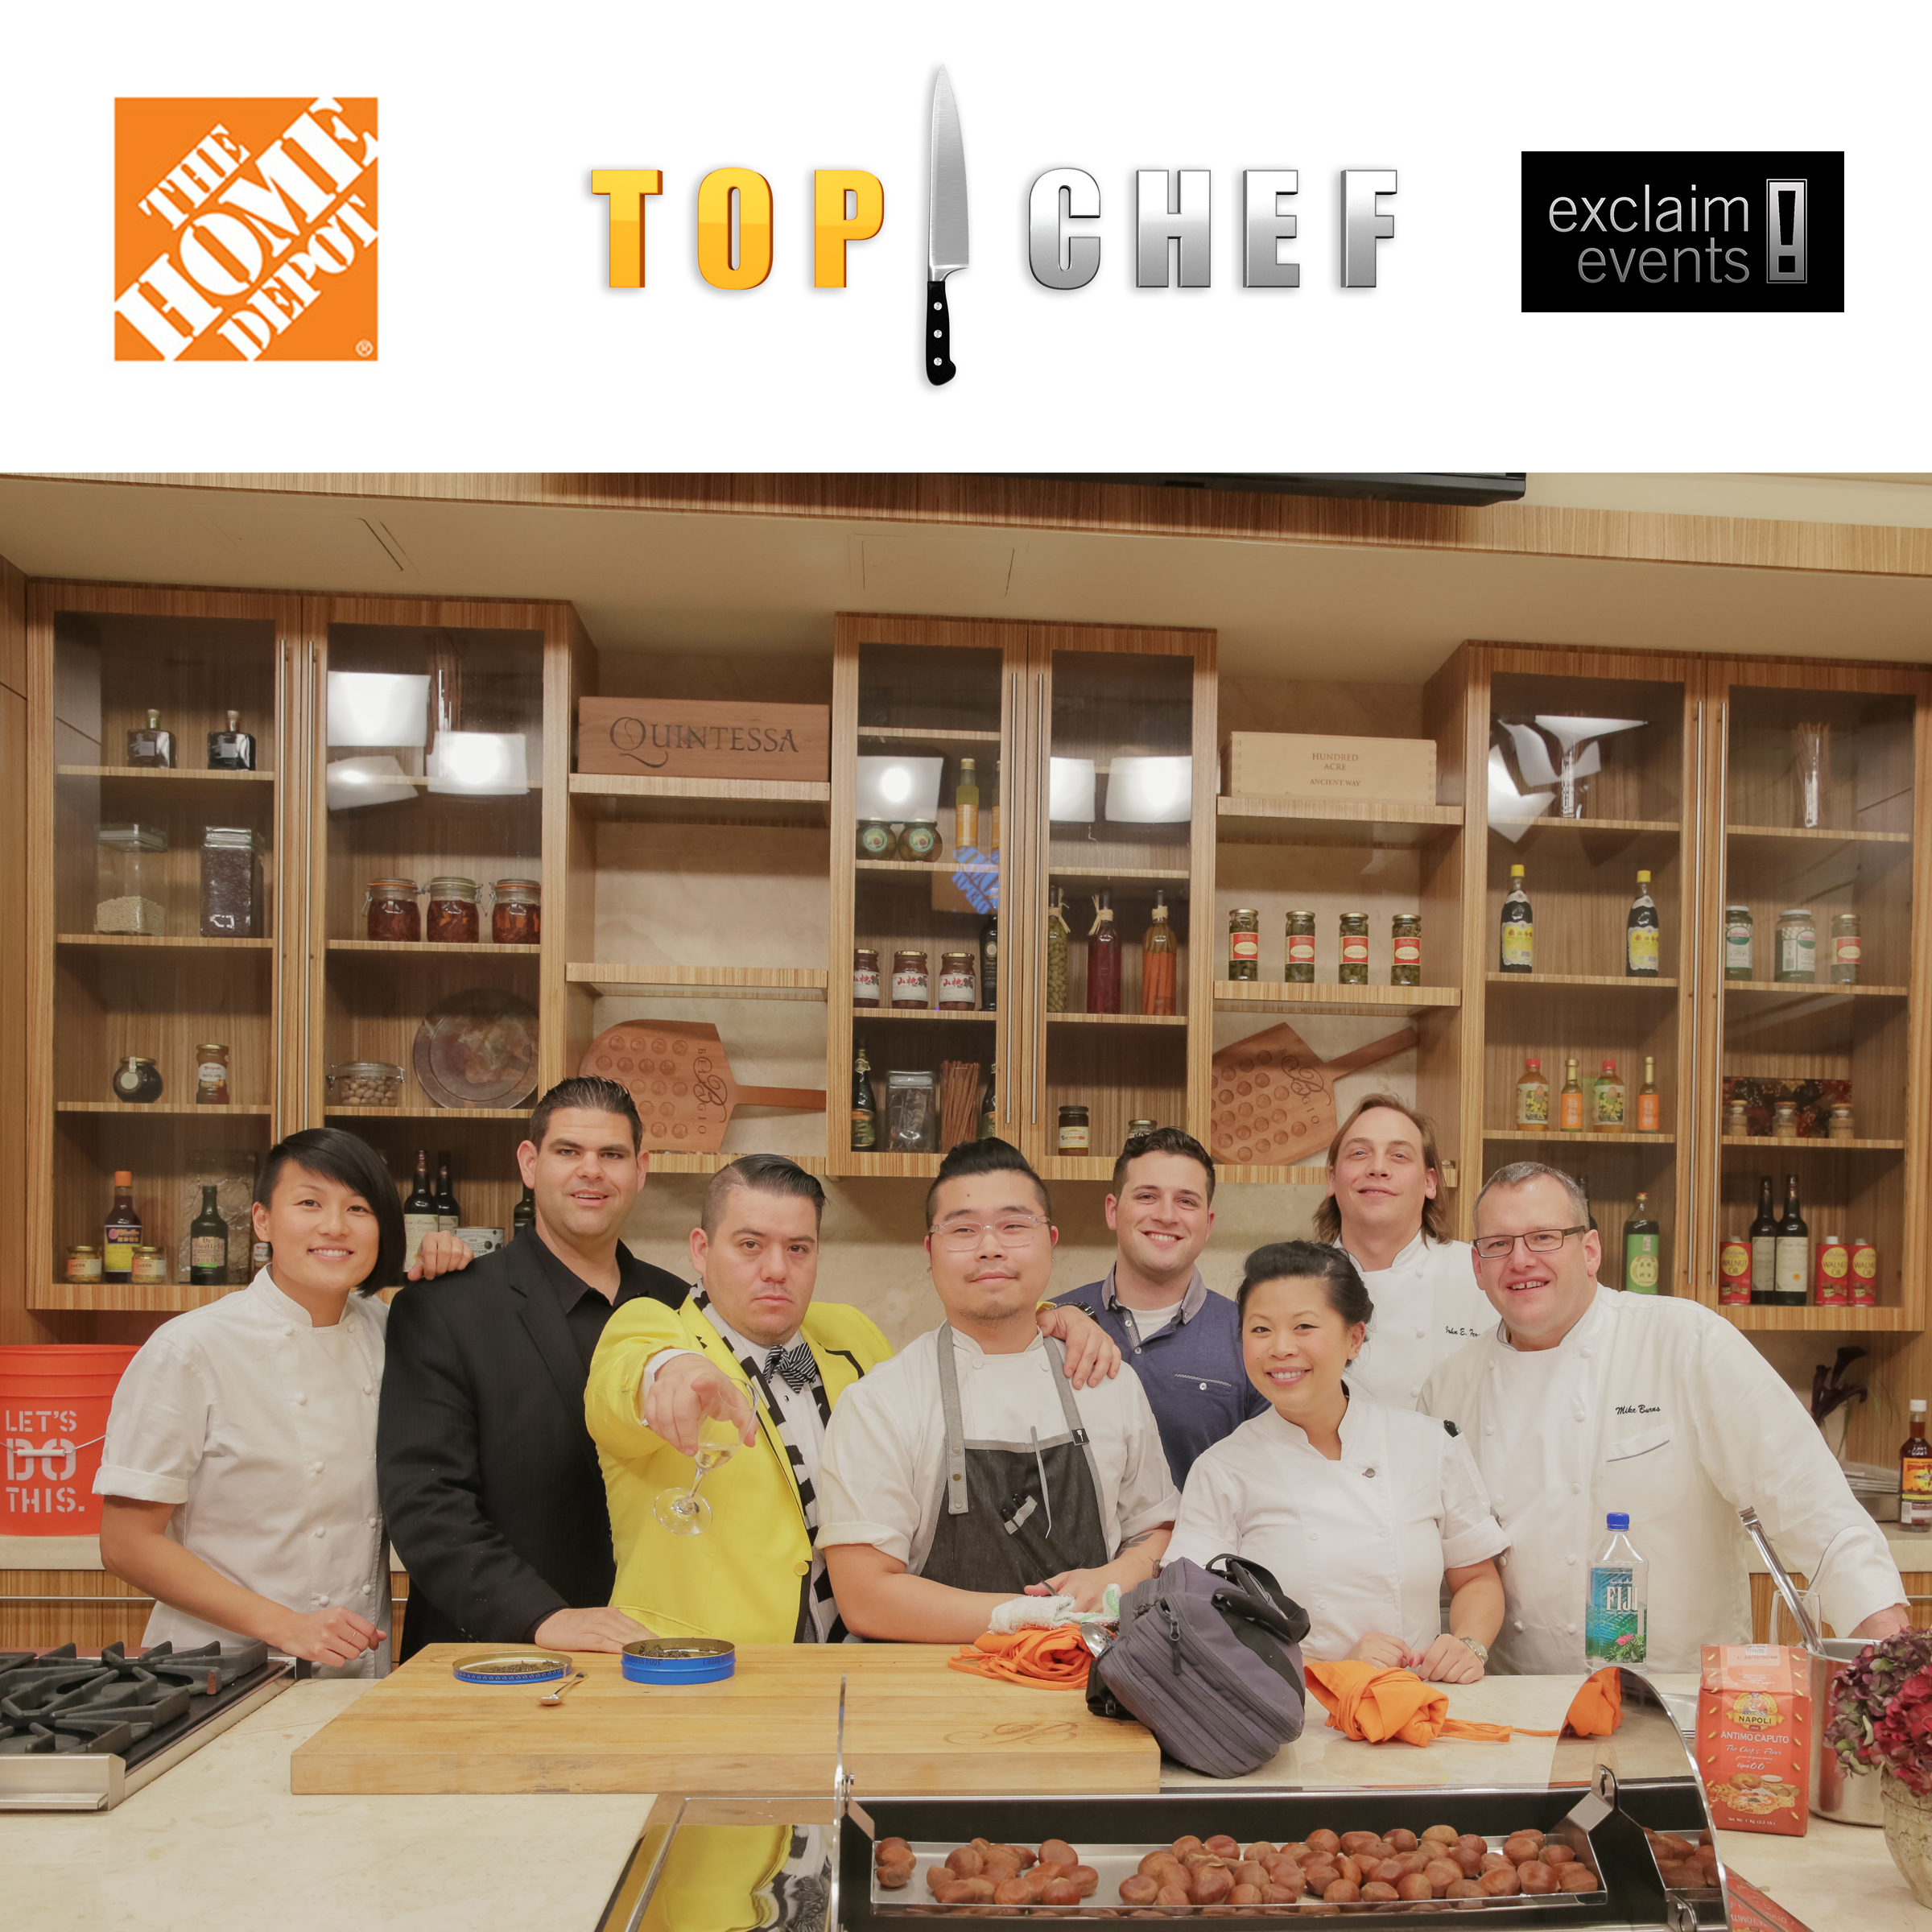 Top Chef Group Shot.jpg